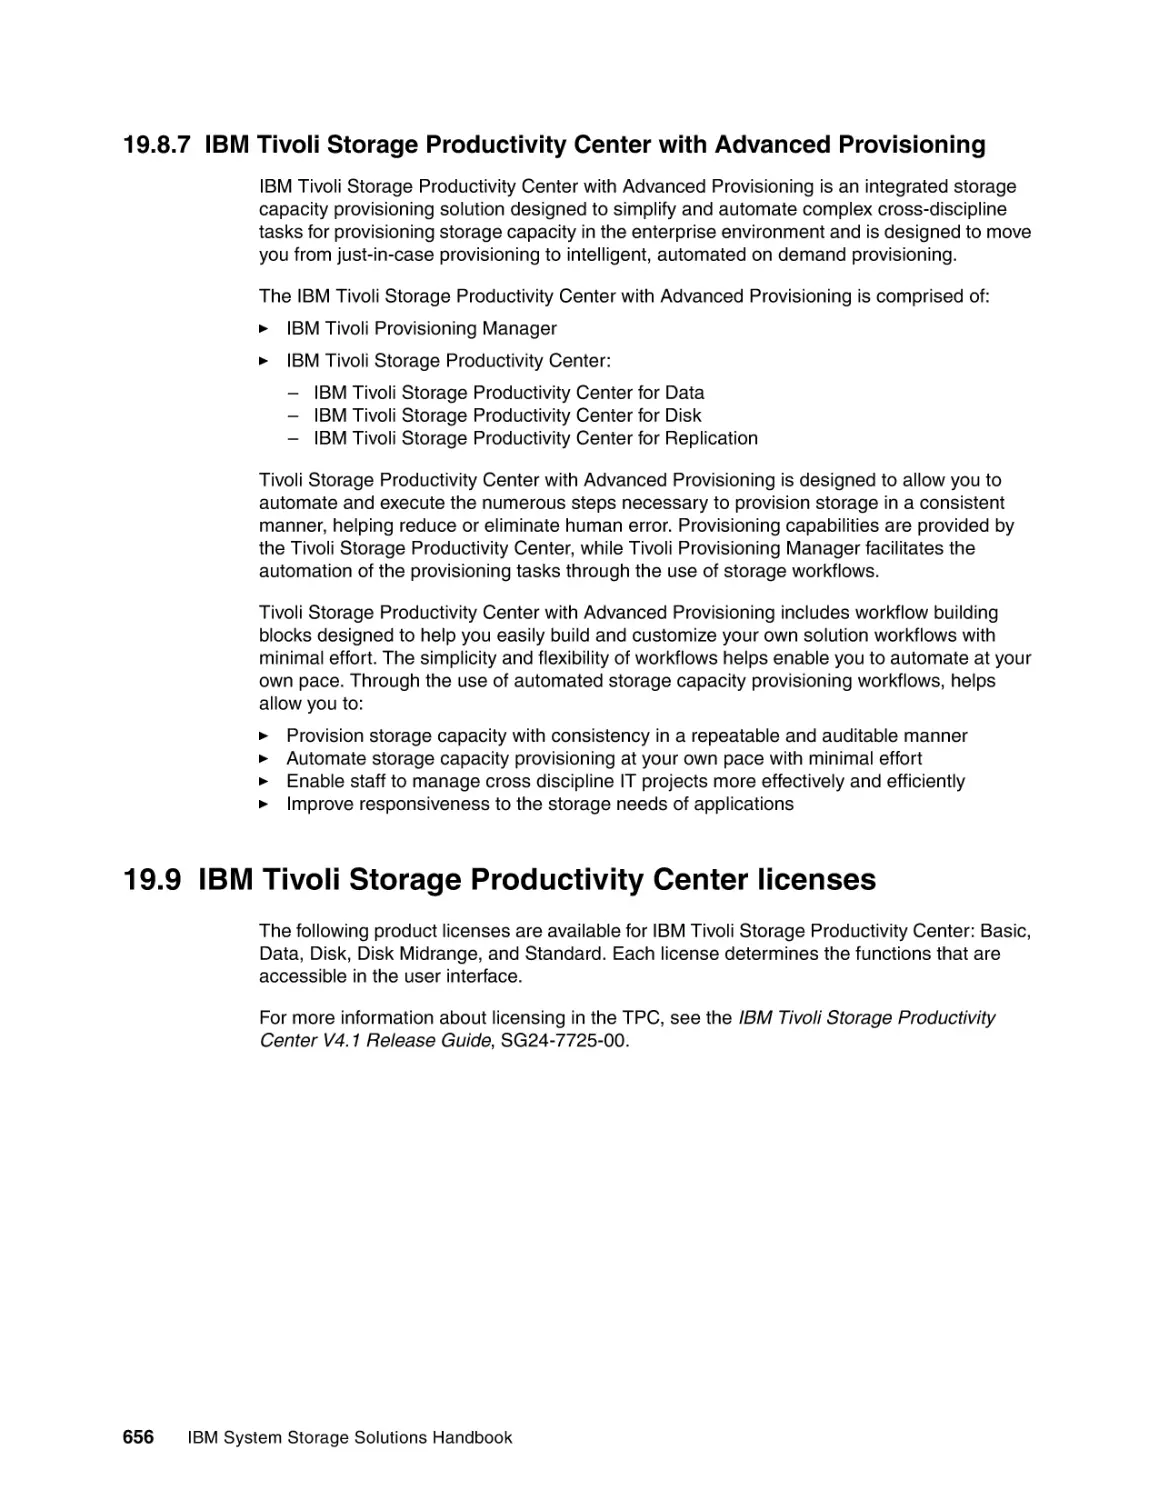 19.8.7 IBM Tivoli Storage Productivity Center with Advanced Provisioning
19.9 IBM Tivoli Storage Productivity Center licenses